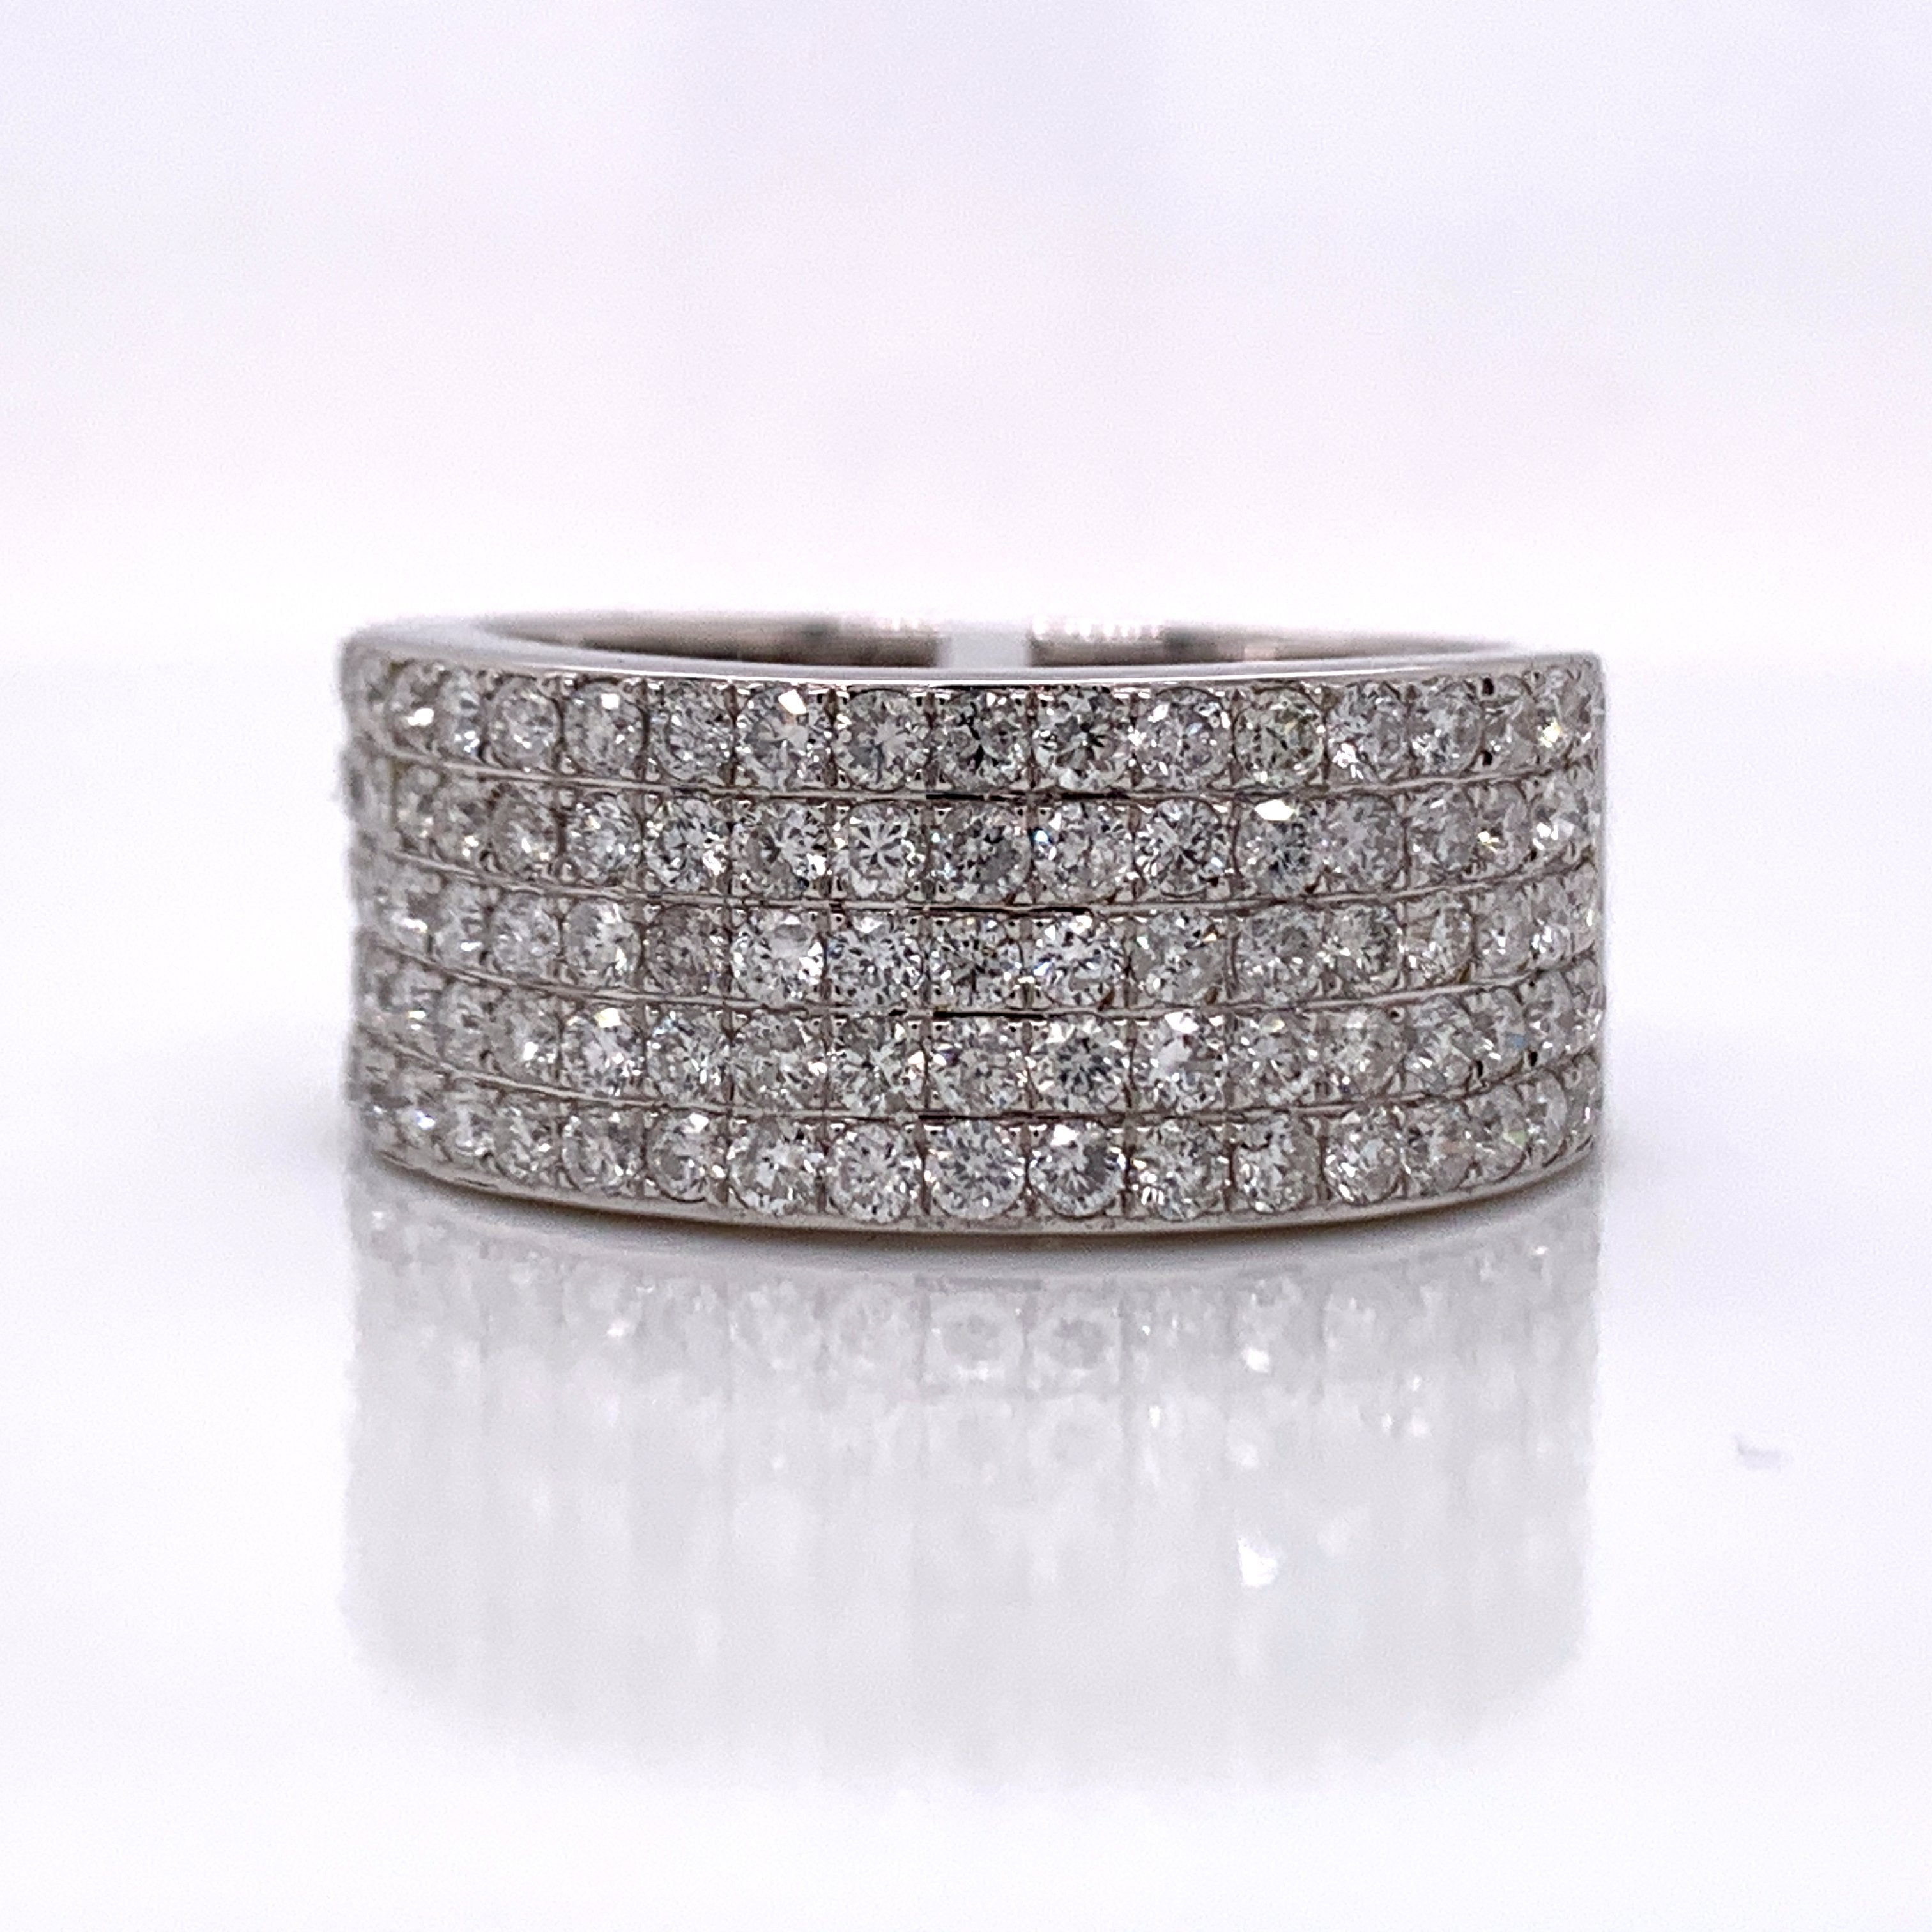 1.97 CT. Diamond Ring in 10K Gold - White Carat Diamonds 